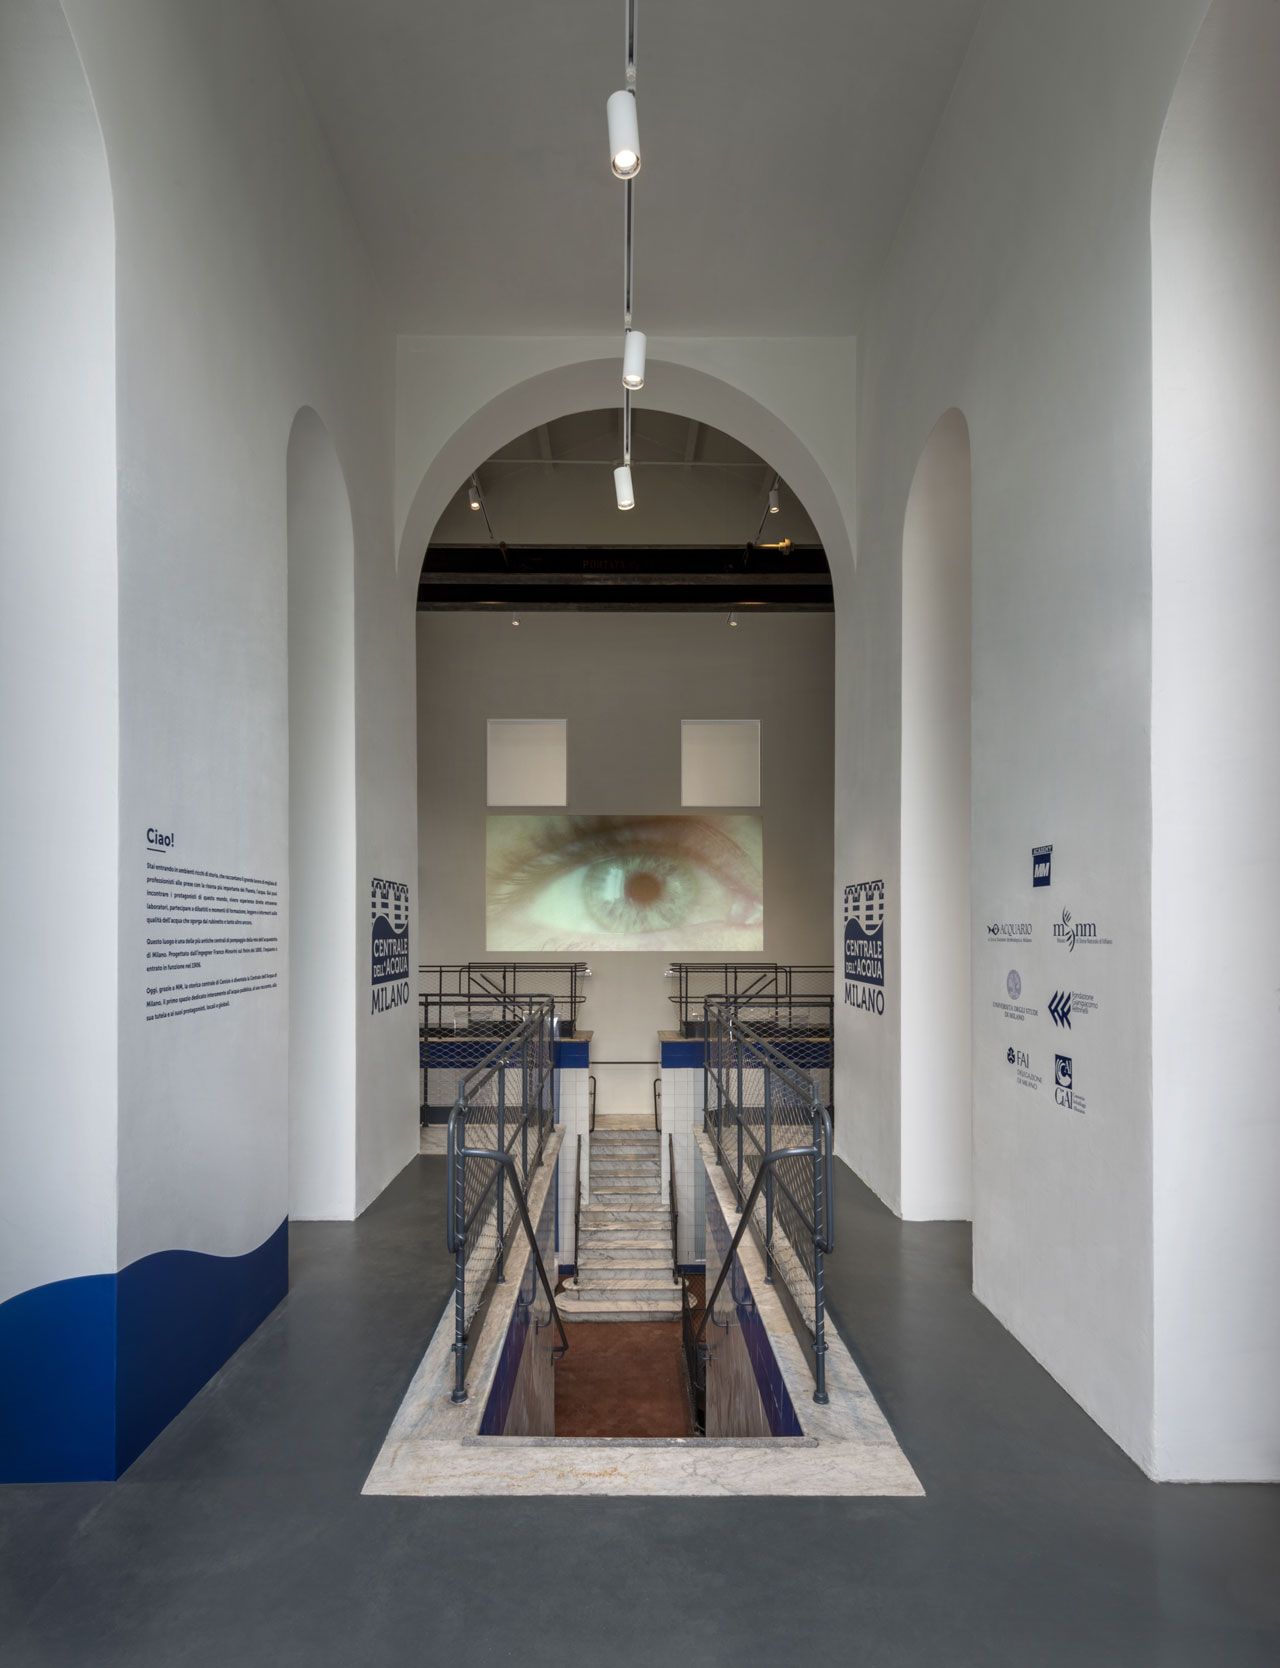 Centrale dell’Acqua. A new museum on public water opens in Milan - Domus